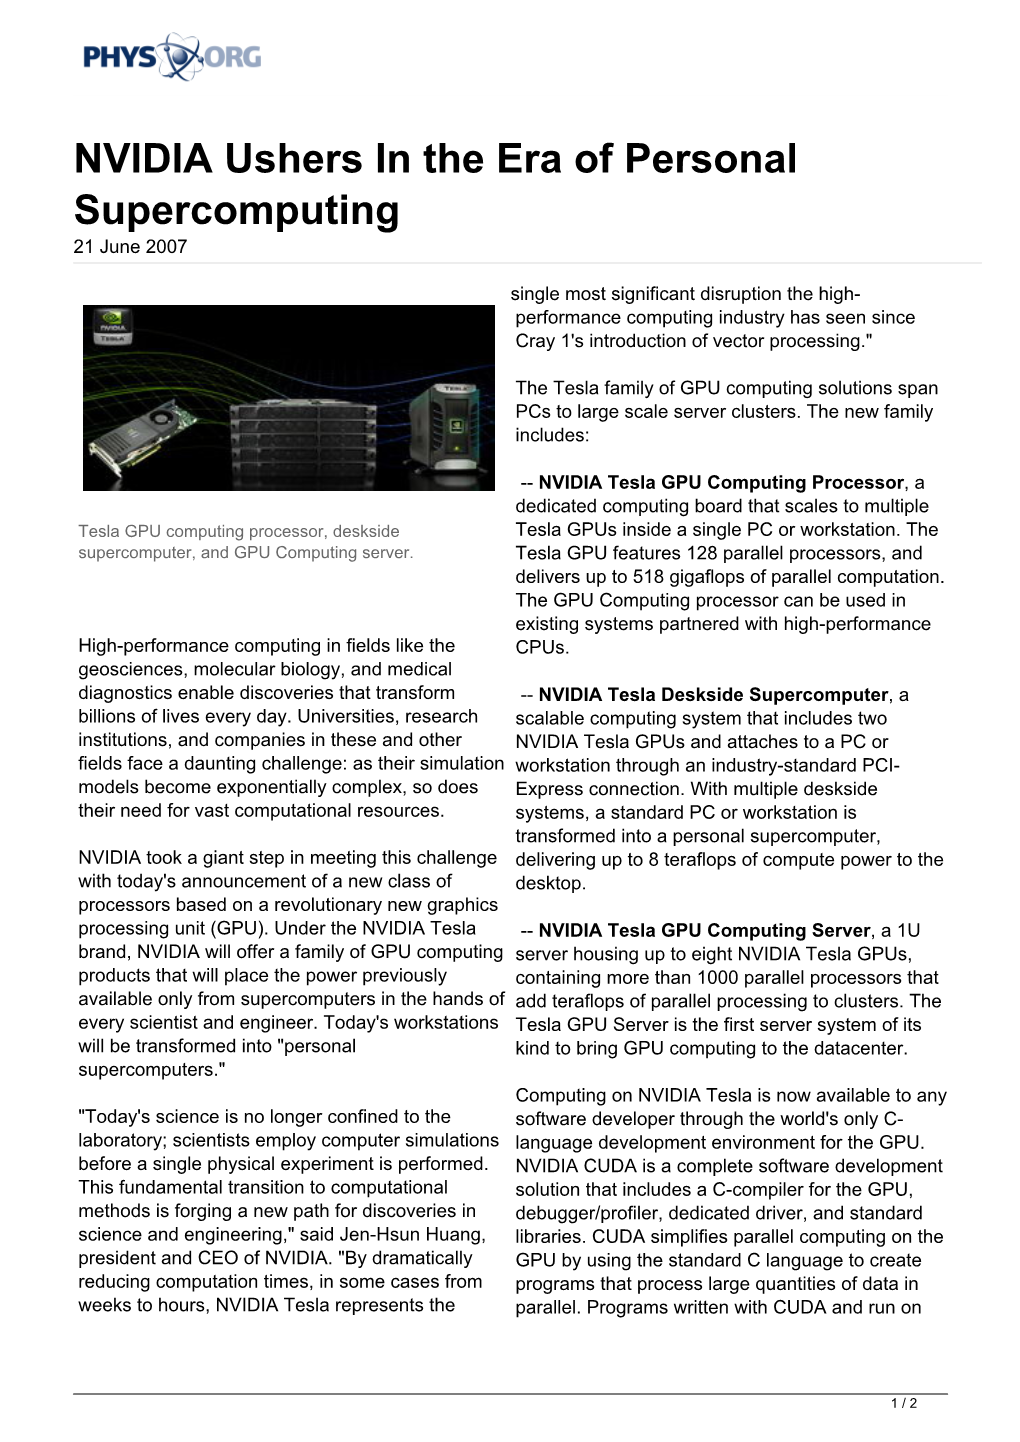 NVIDIA Ushers in the Era of Personal Supercomputing 21 June 2007